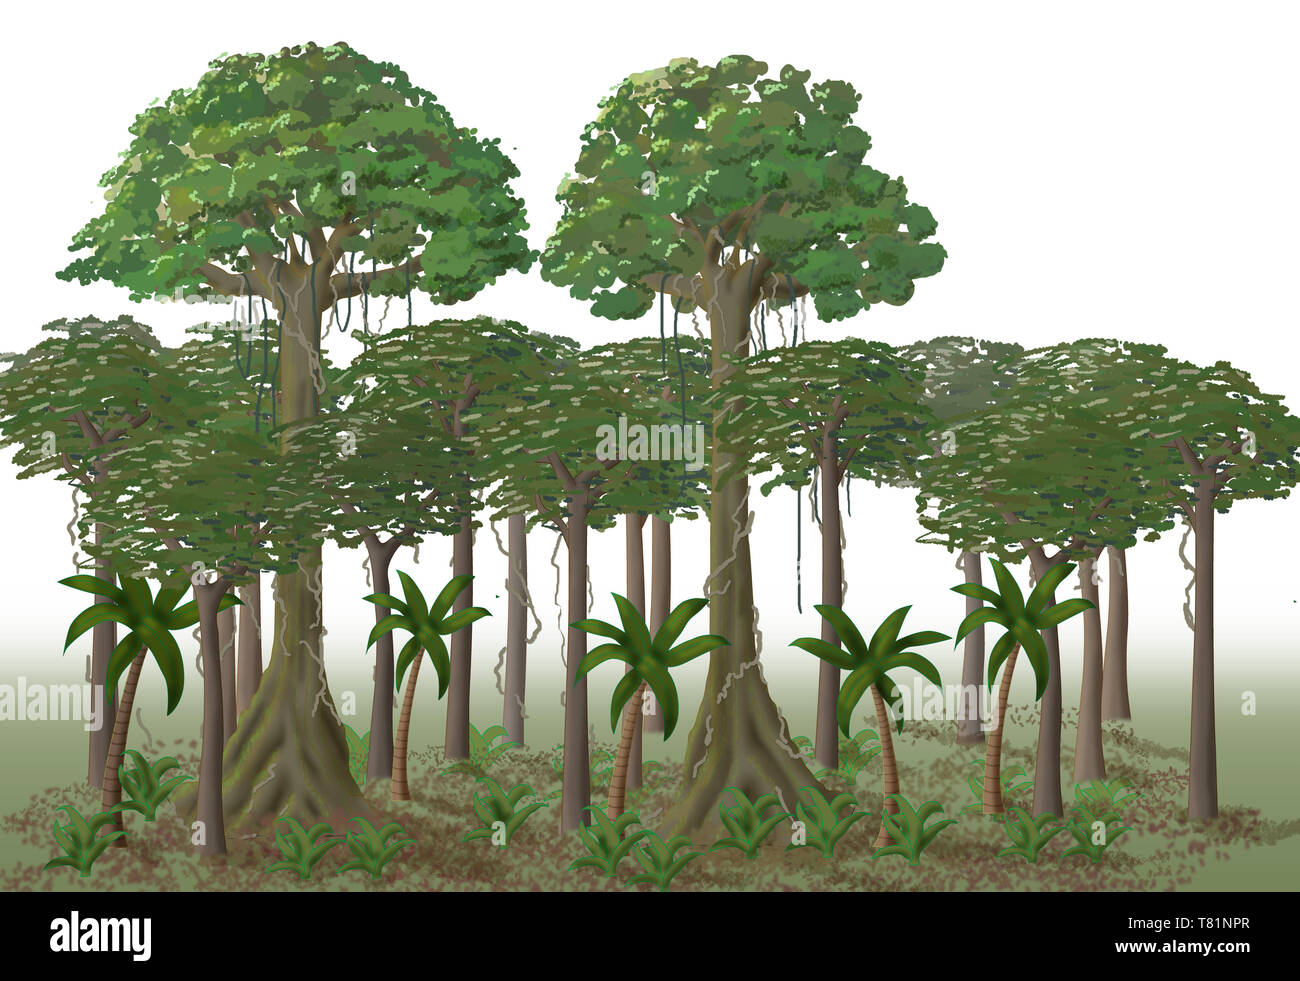 Rainforest Layers, Illustration Stock Photo